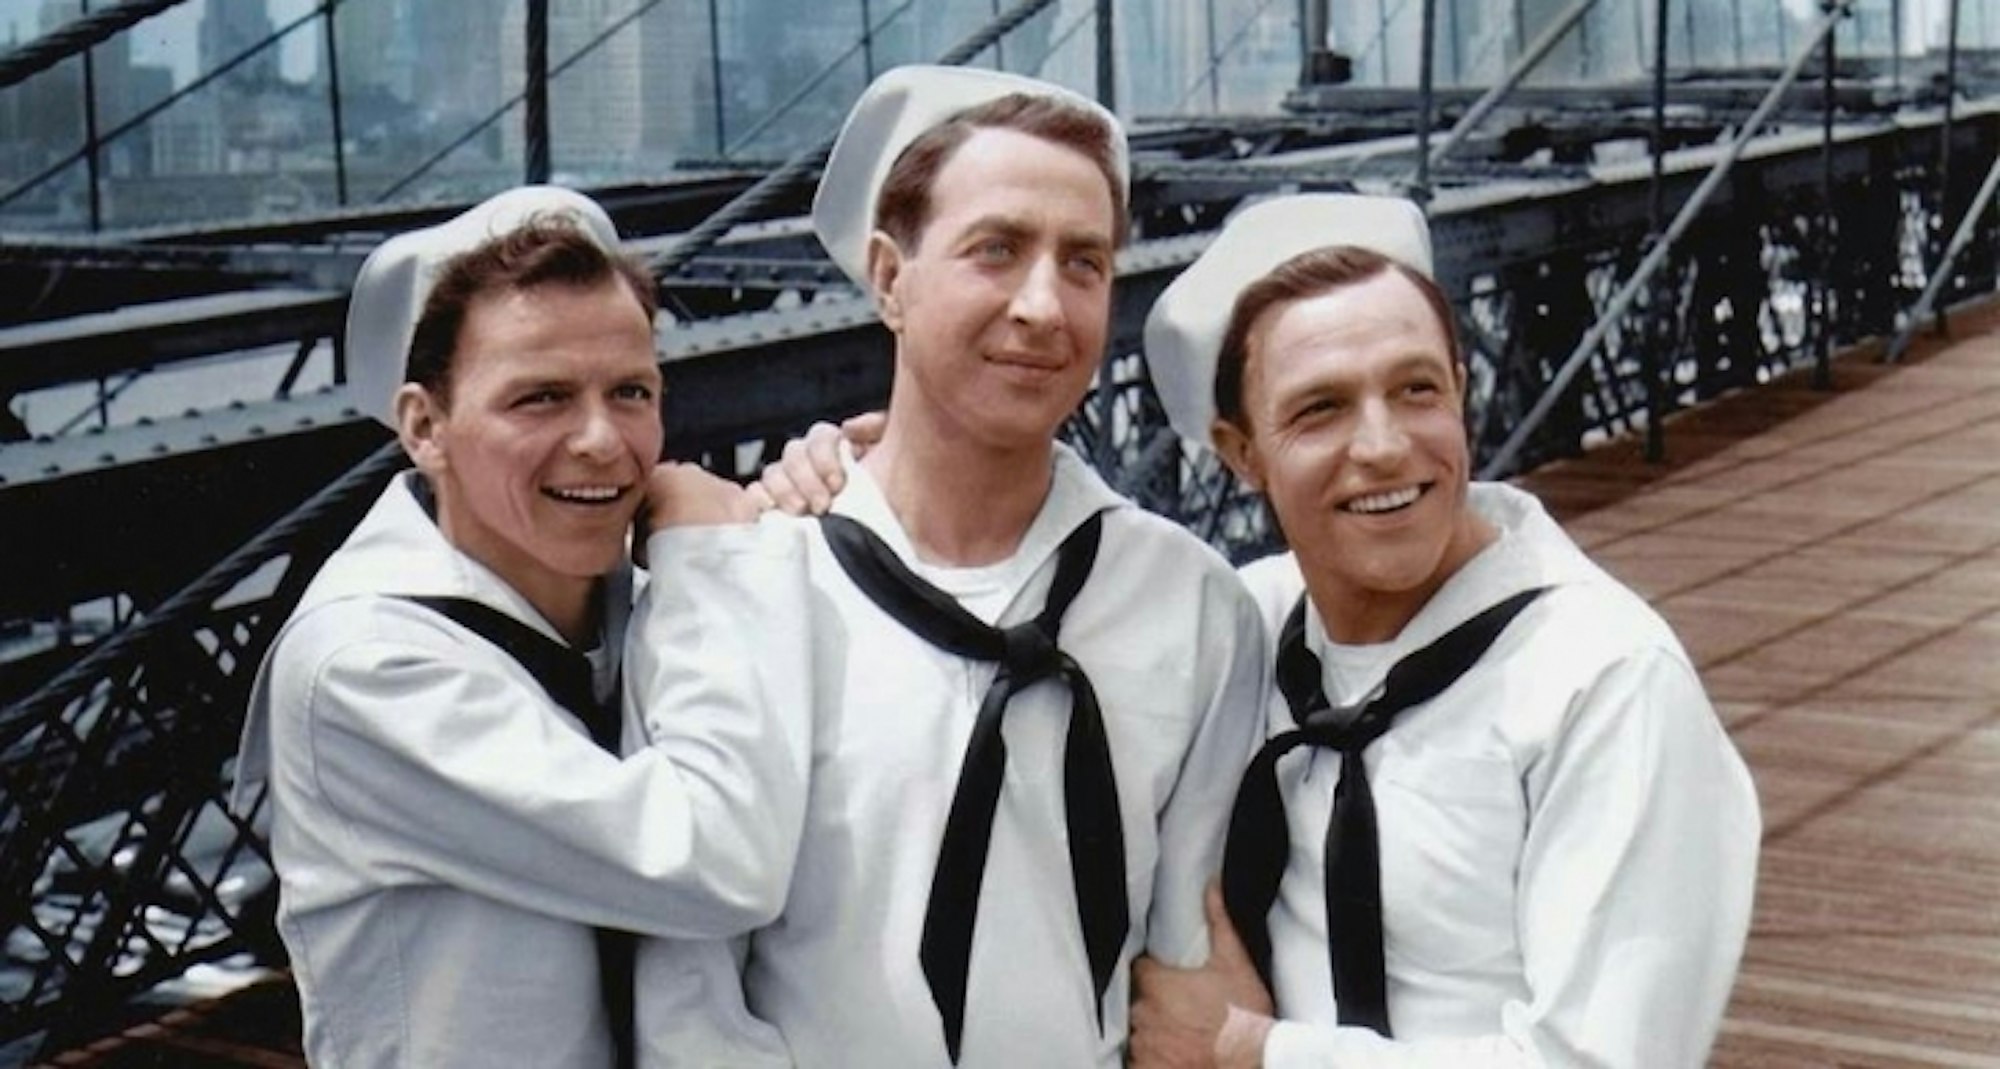 Video still of 3 people in sailor's uniforms on Brooklyn Bridge in New York.